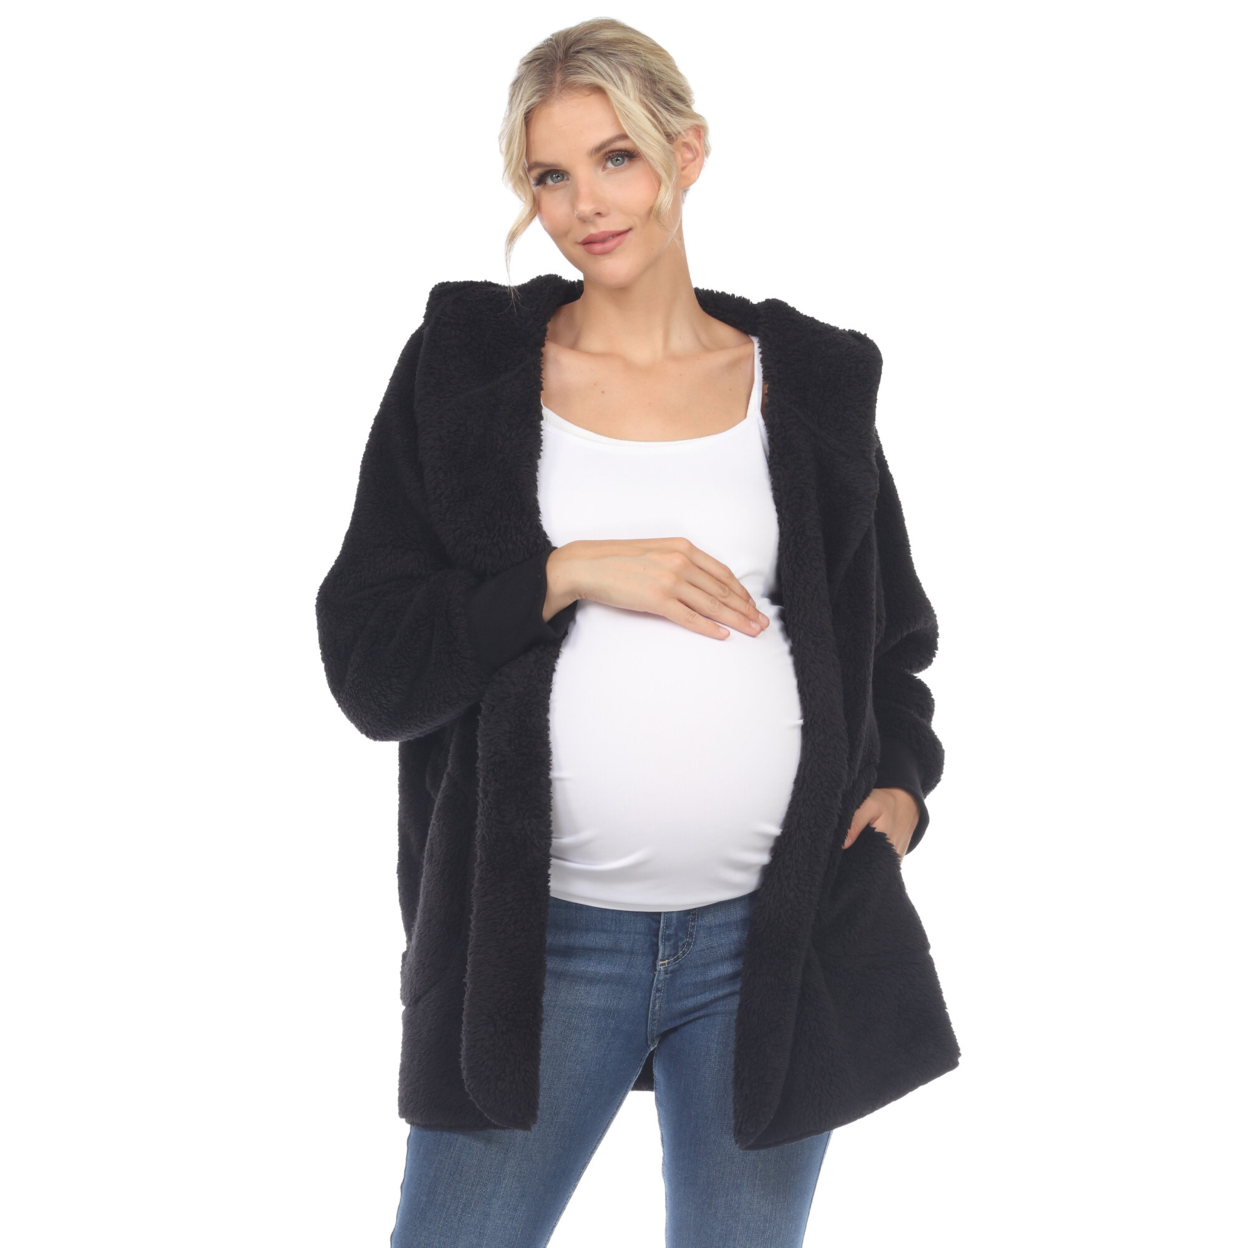 White Mark Womenâs Maternity Plush Hooded Cardigan With Pockets - Black, S/M